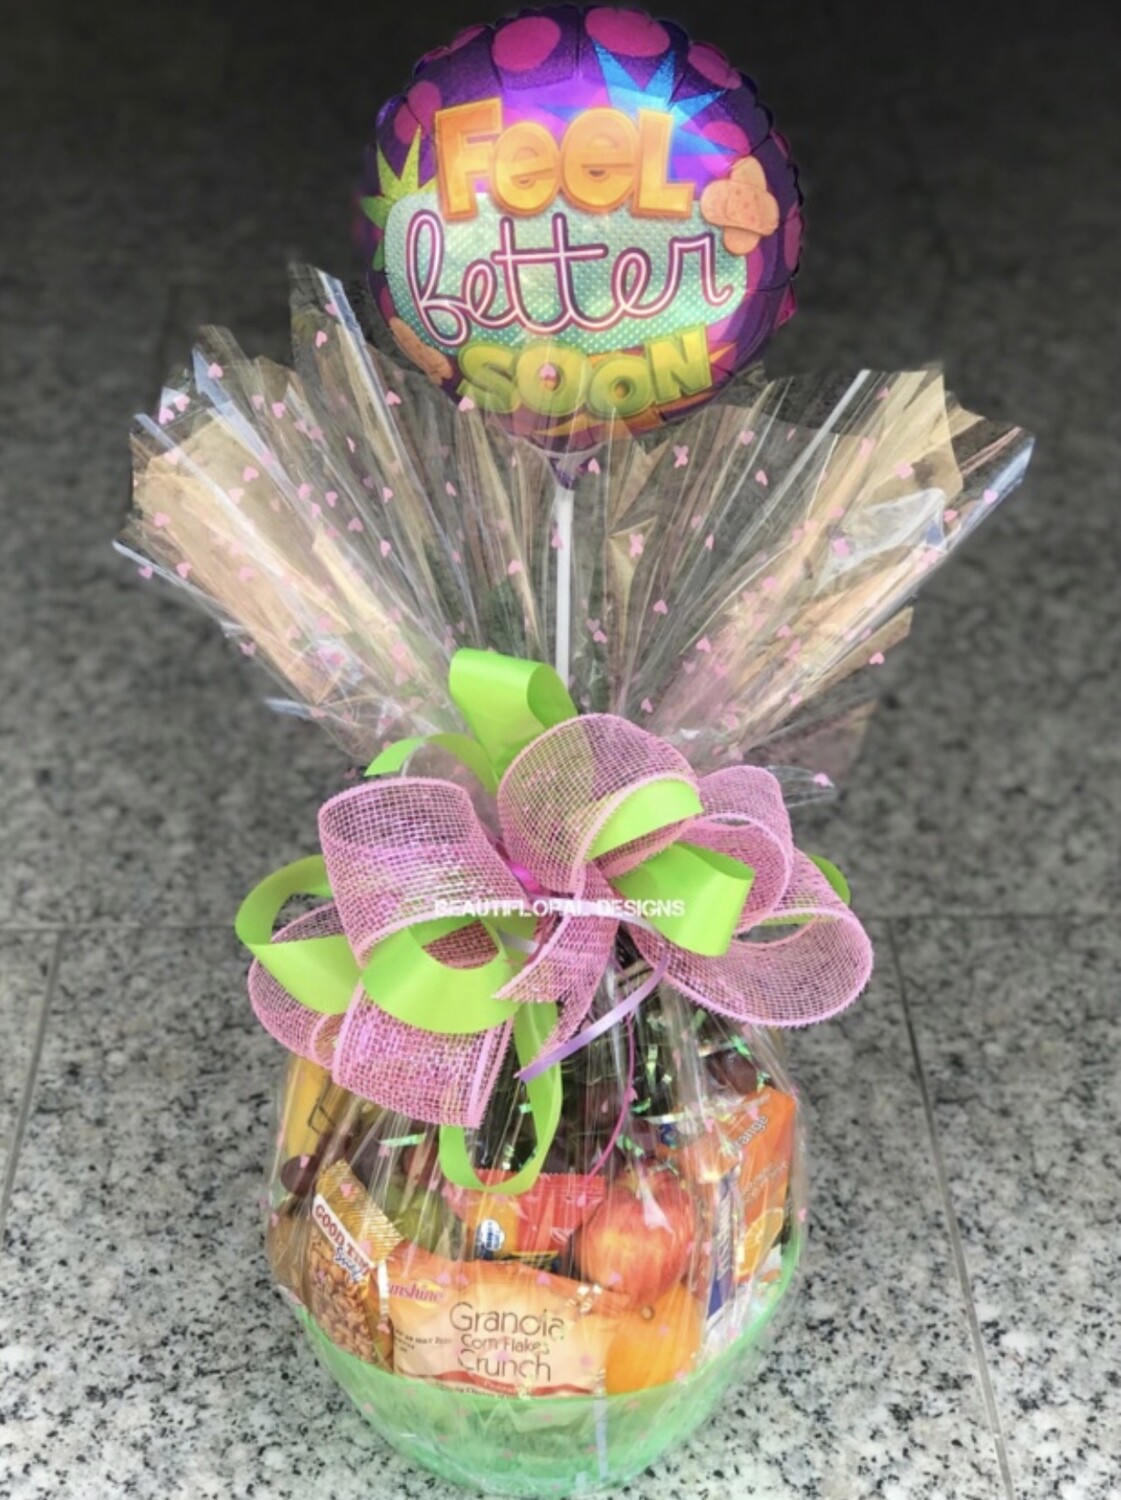 Fruit and snacks basket w/ balloon